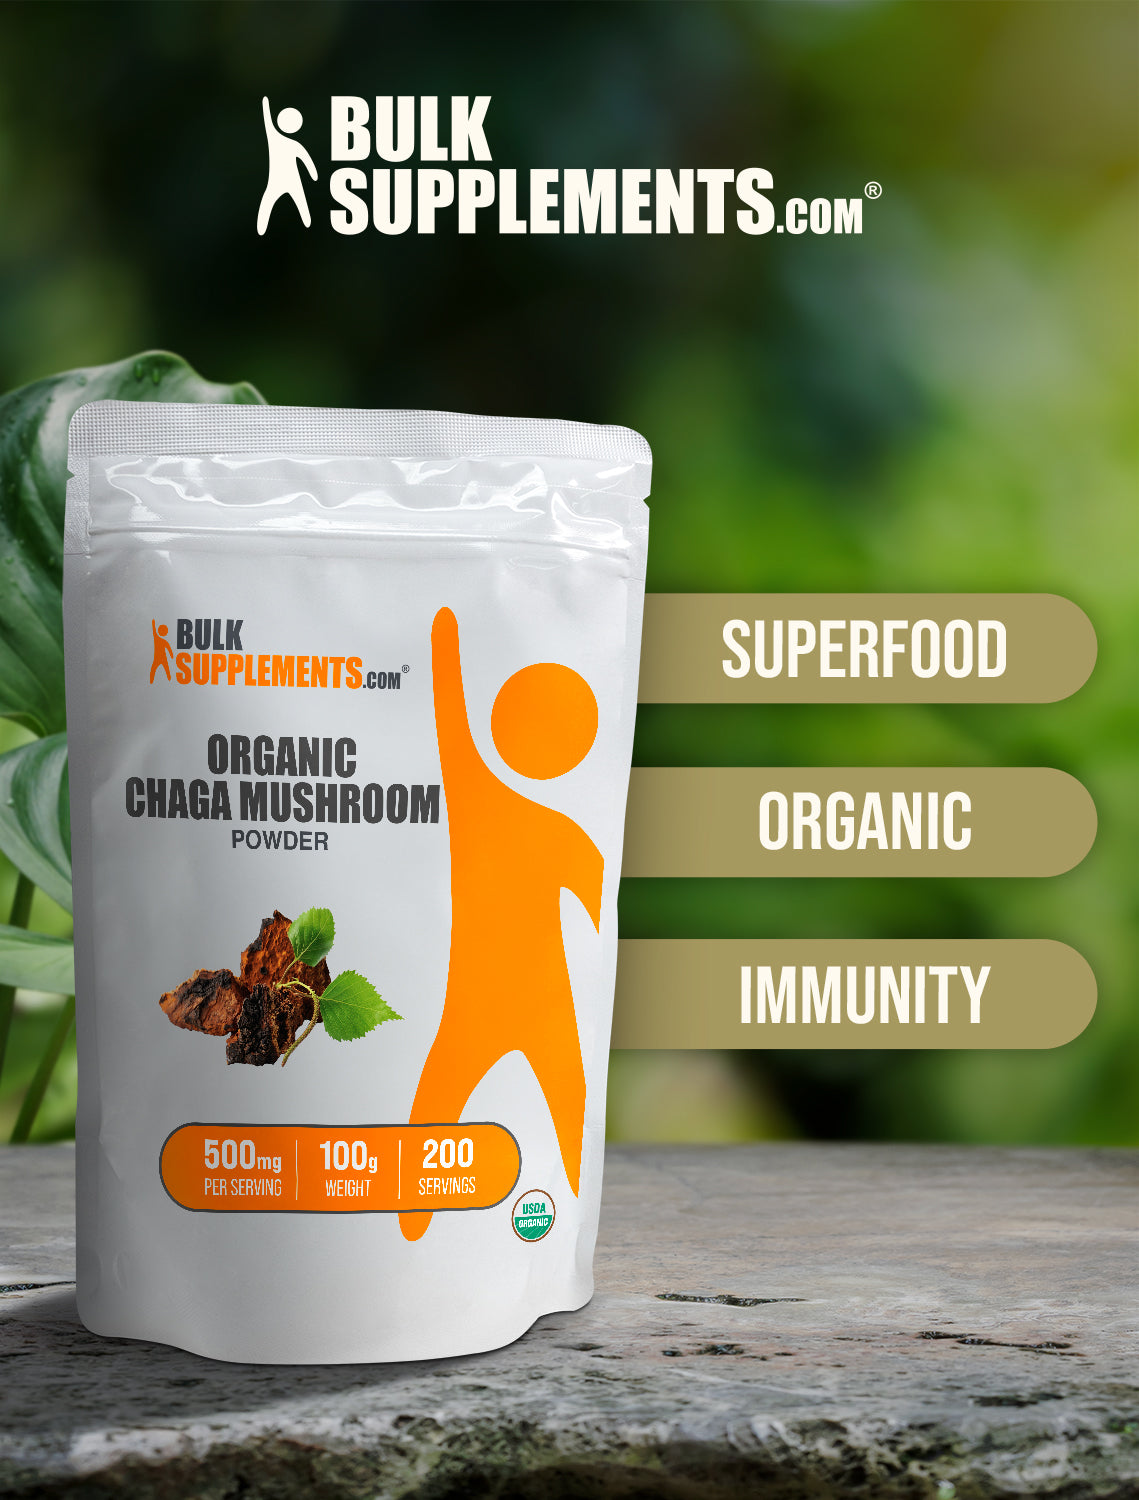 Organic chaga mushroom powder keyword image 100g